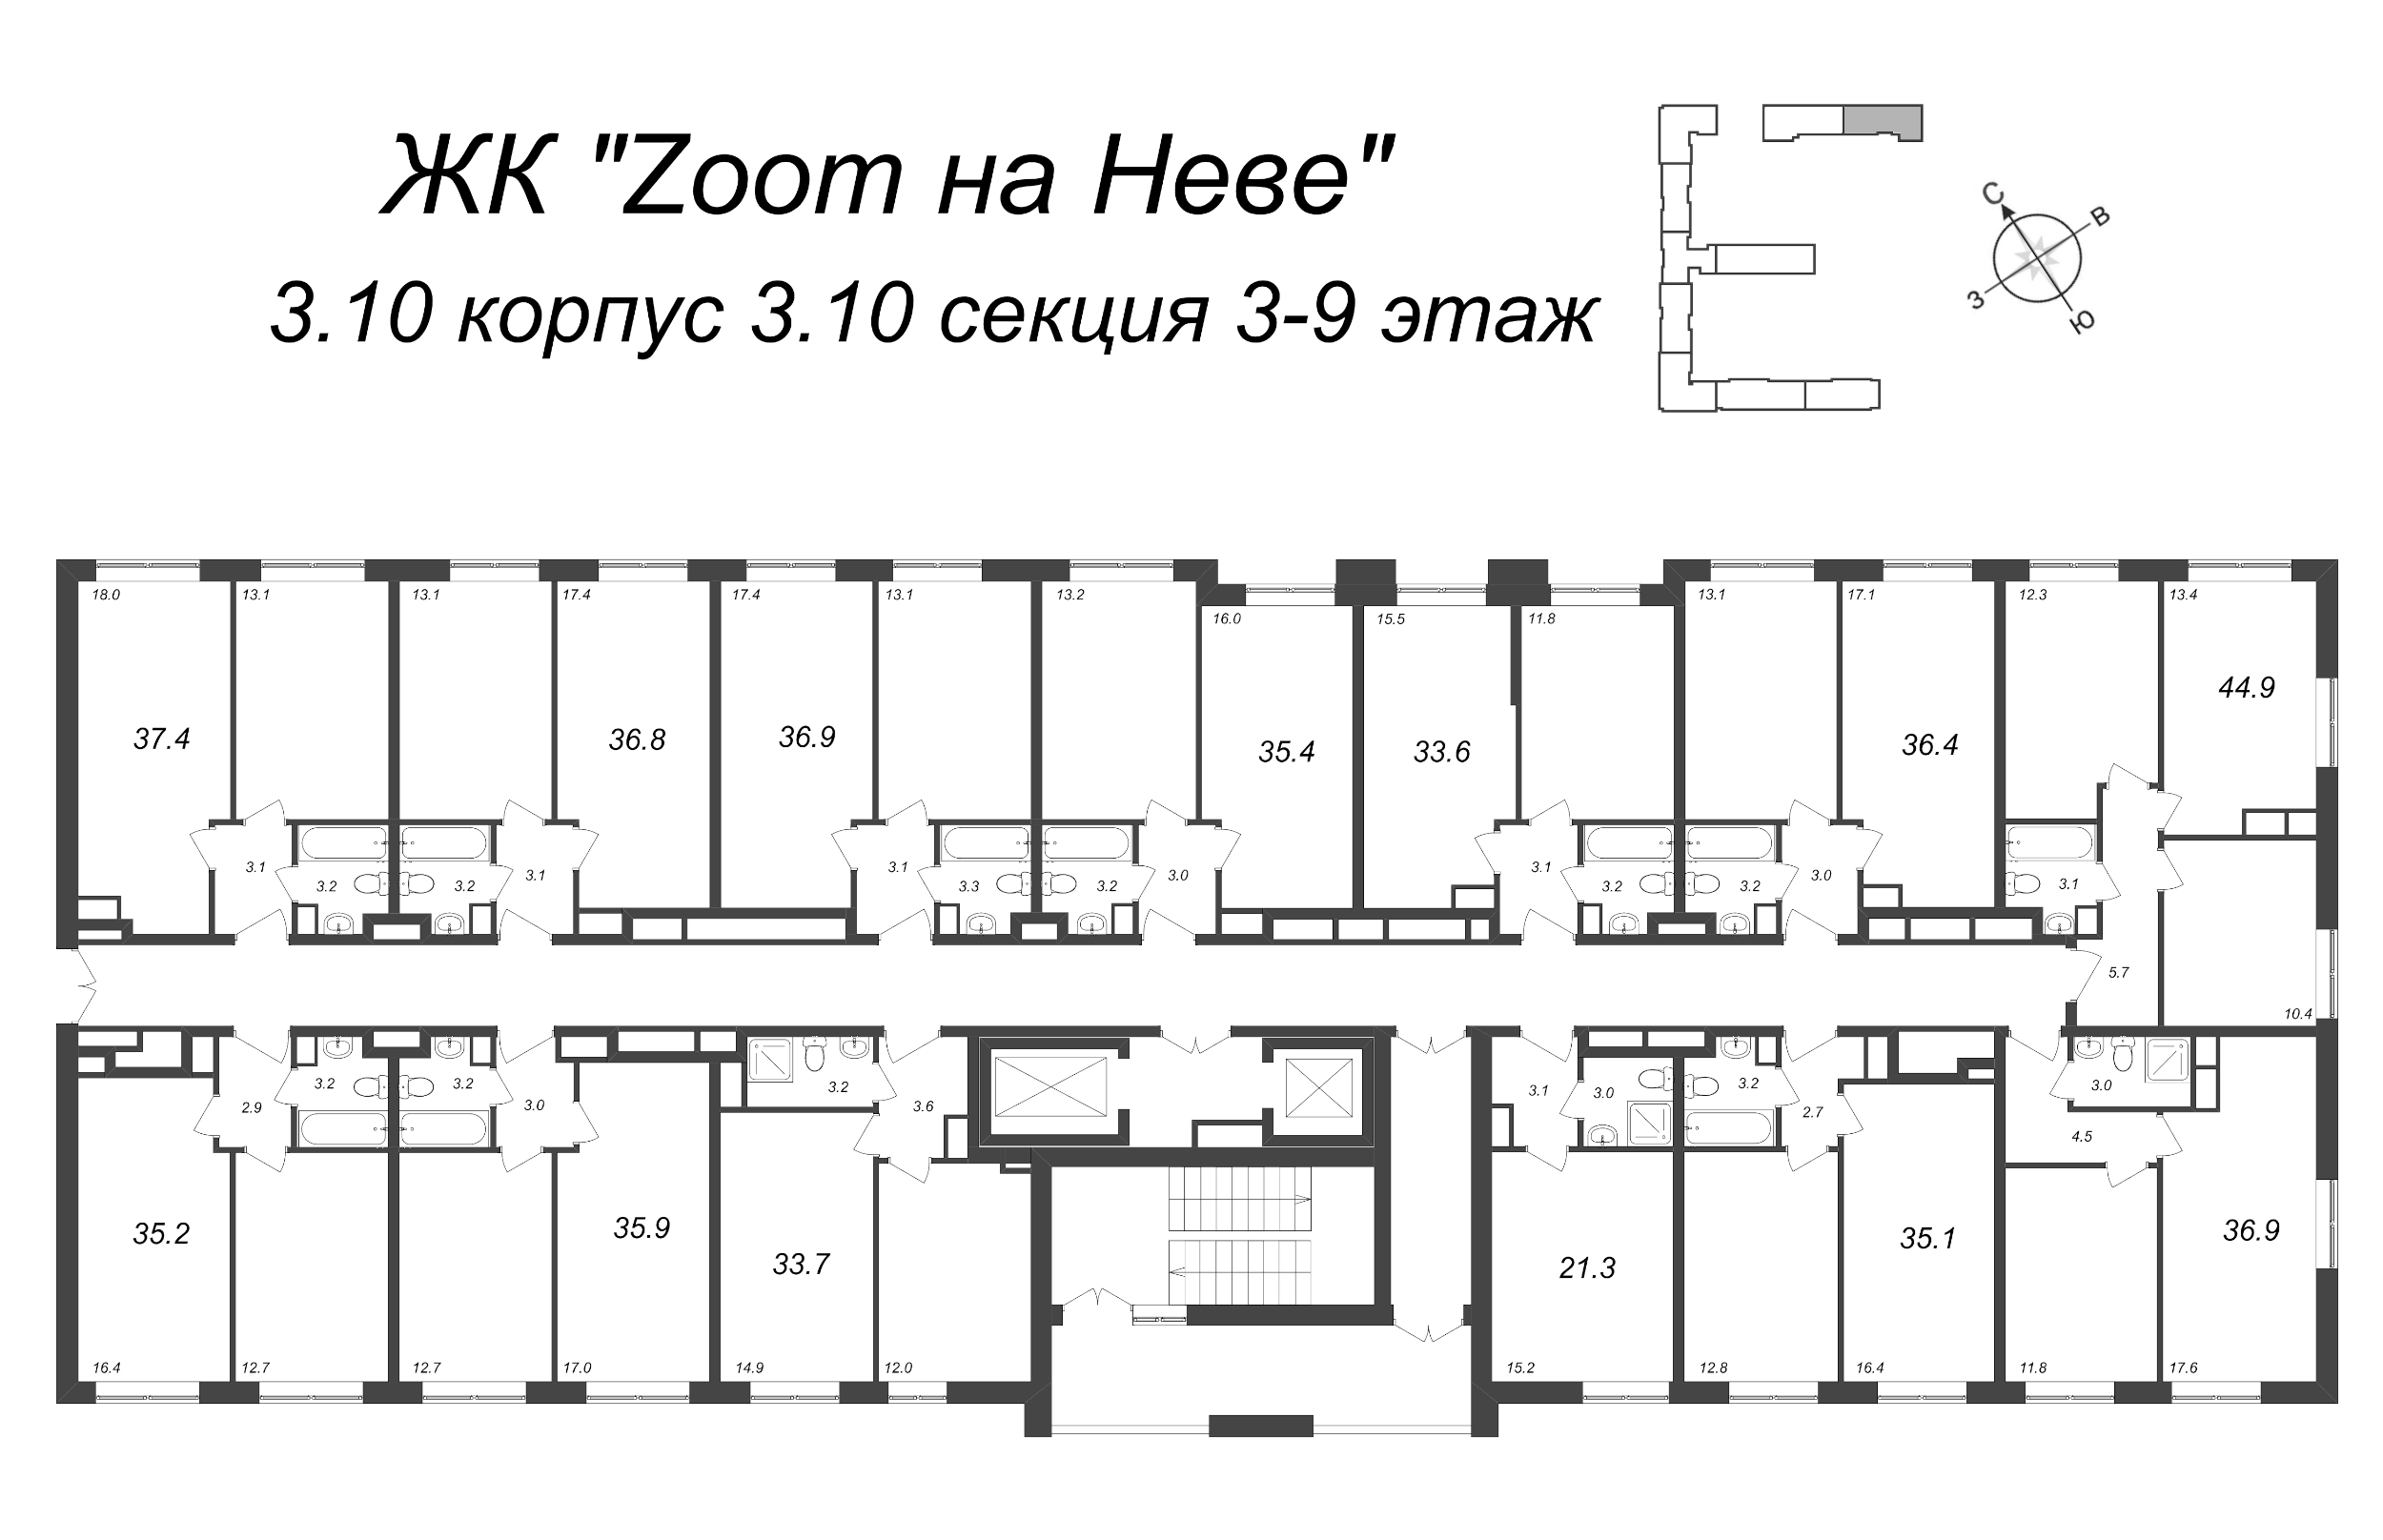 2-комнатная (Евро) квартира, 36.35 м² - планировка этажа